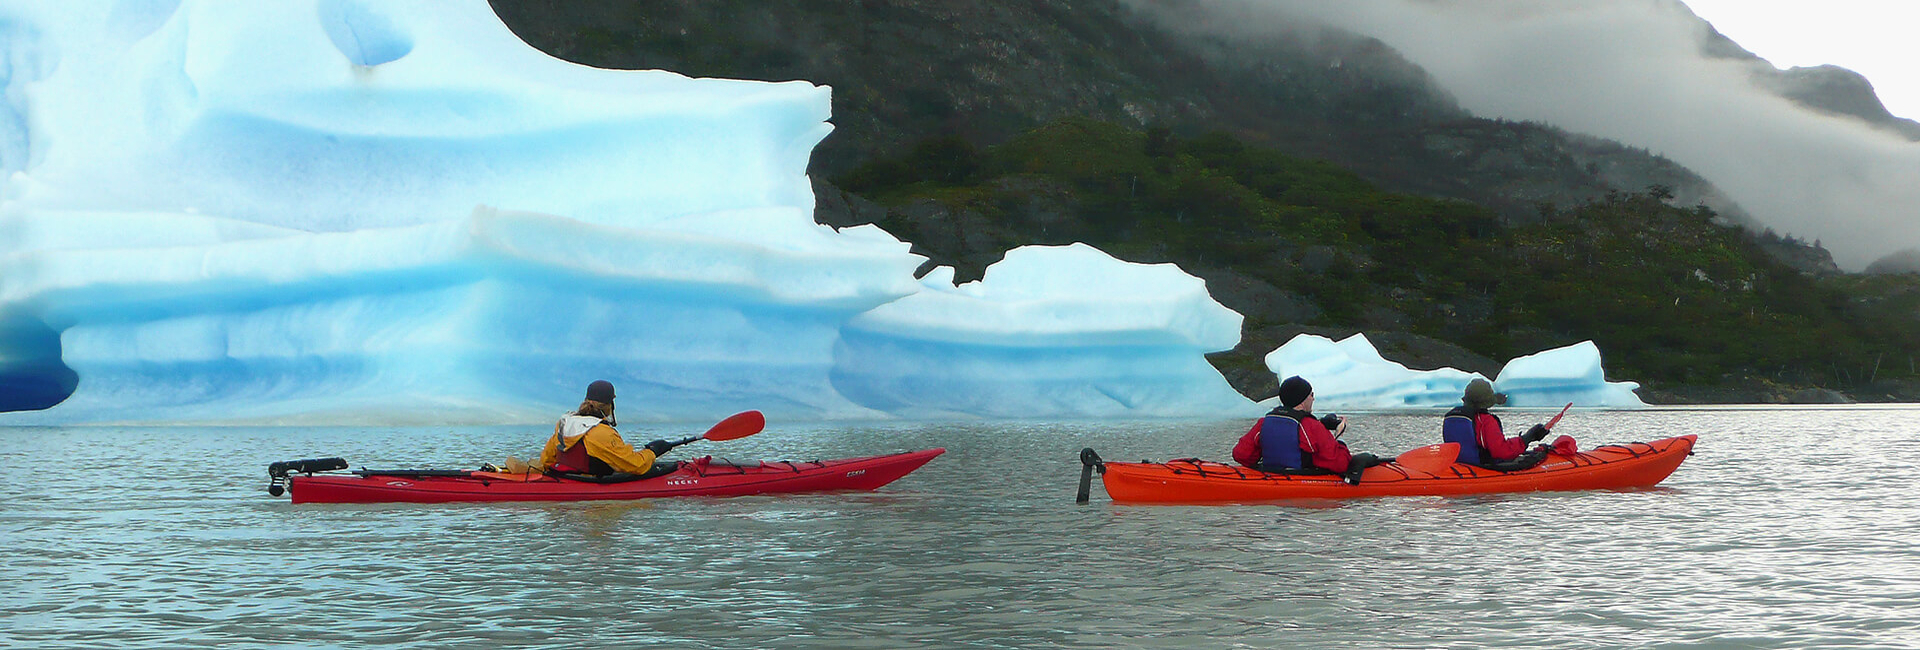 Kayaking in Torres del Paine National Park